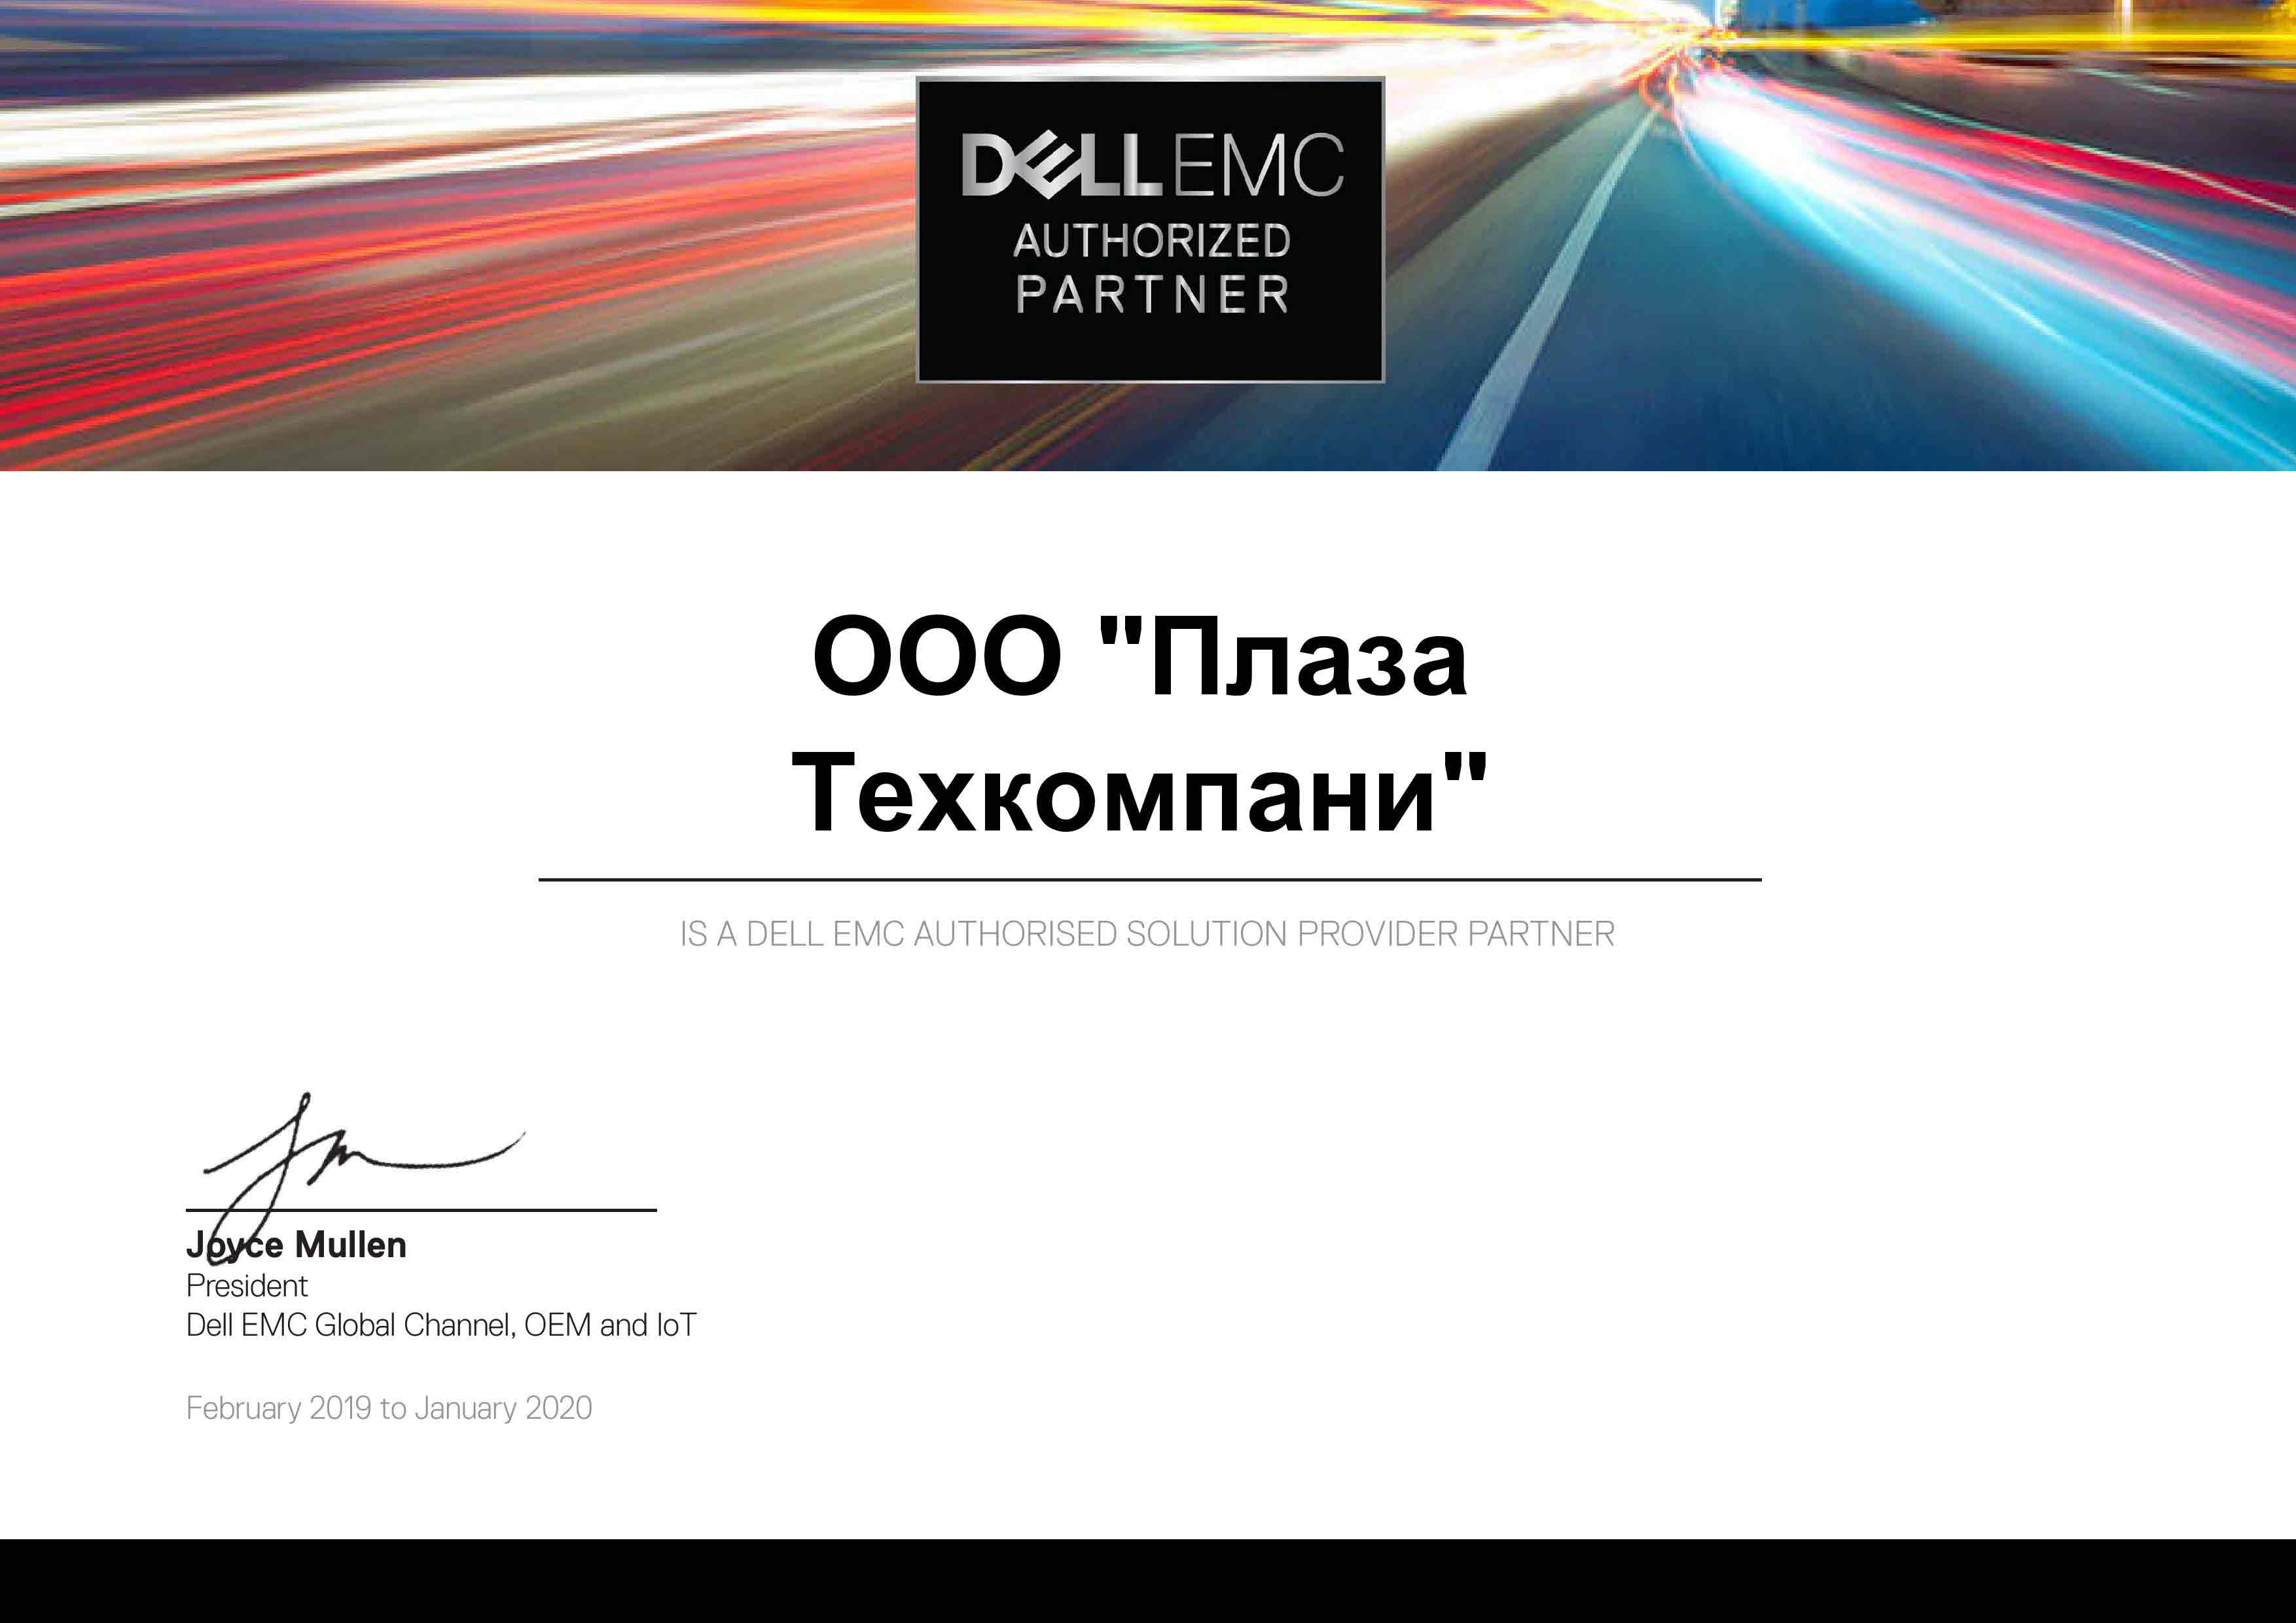 Поставщик ит | Официальные поставщики Dell Dell EMC Partner Certificate 2019 - 2020 Registered AUTHORIZED RESELLER LETTER